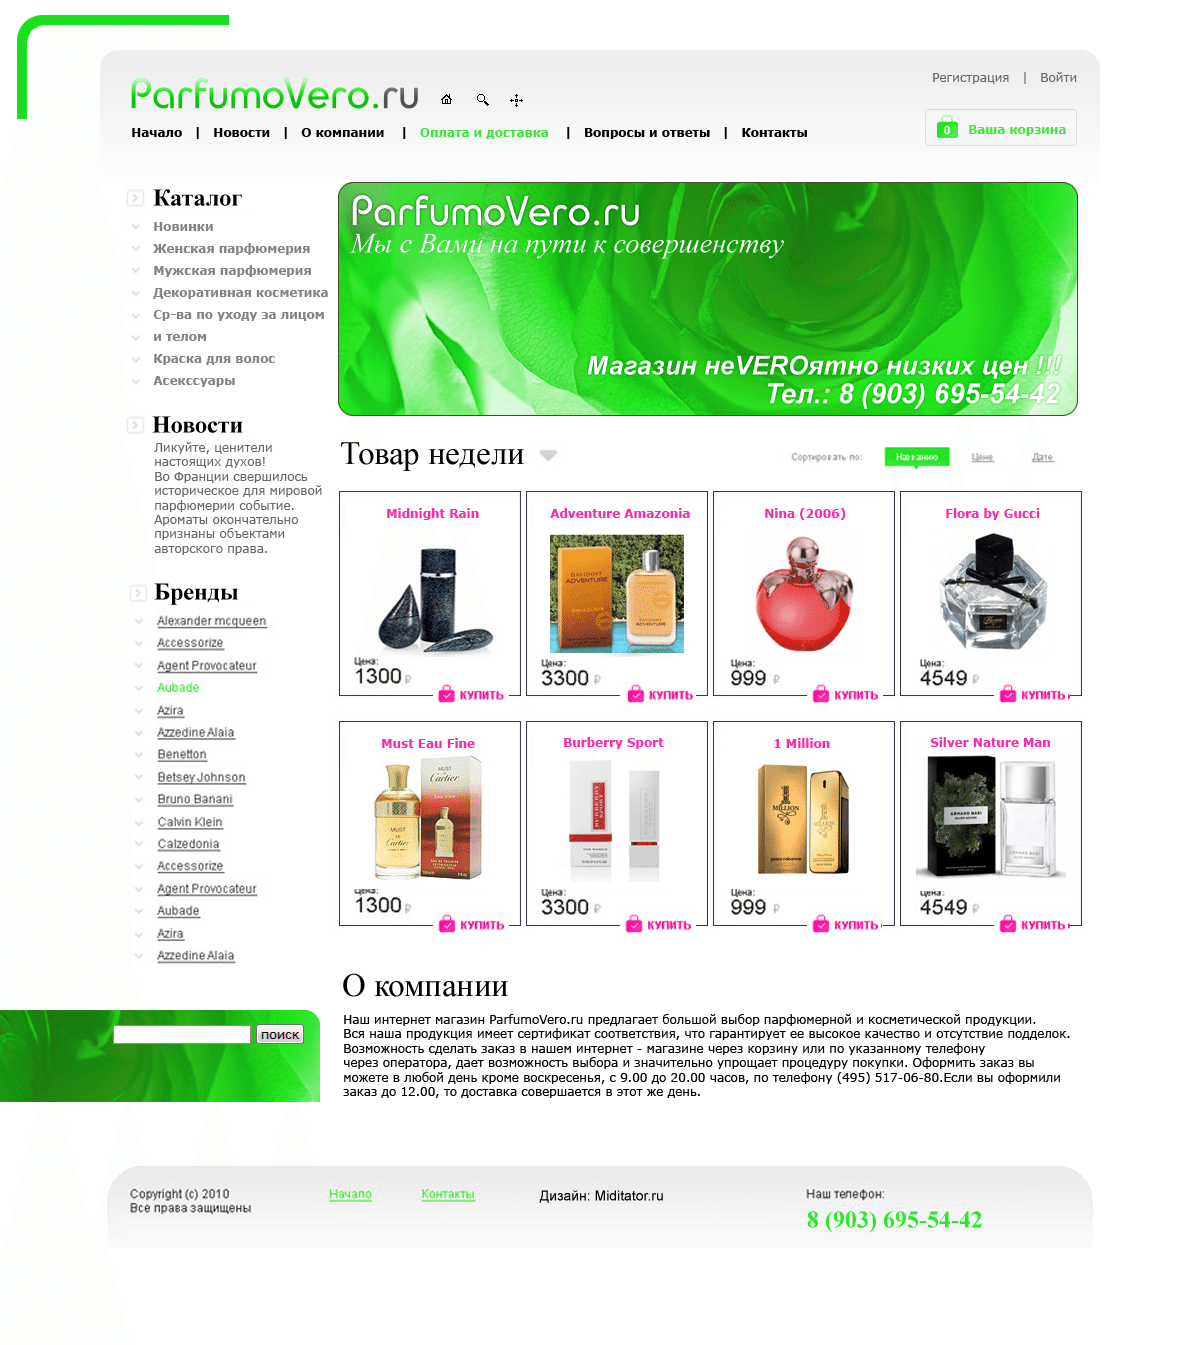 Создание интернет-магазина парфюмерии и косметики